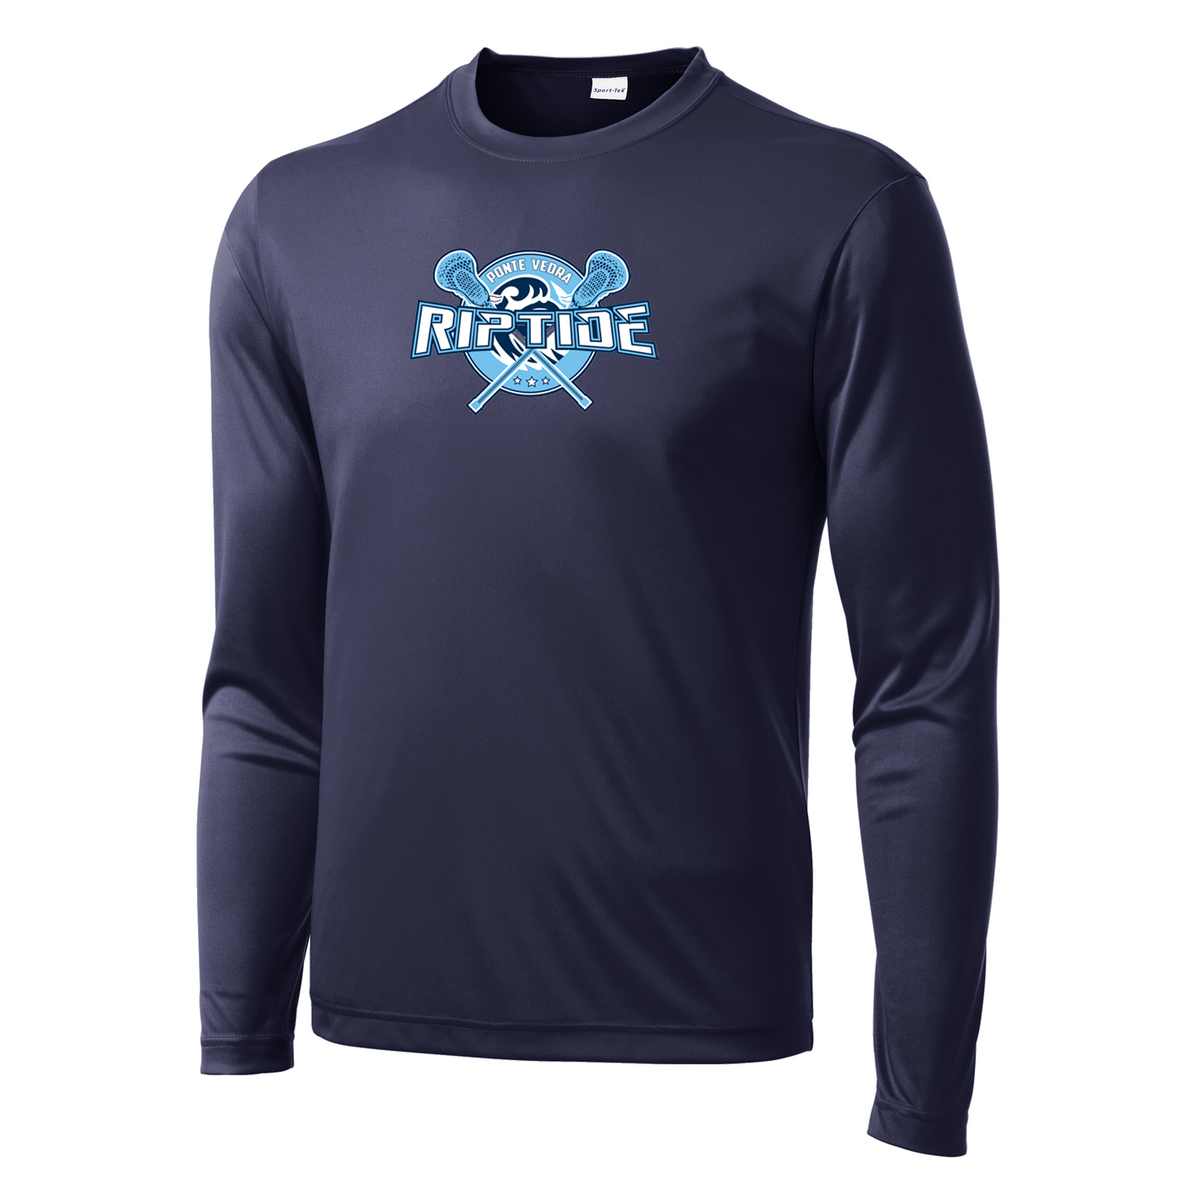 Ponte Vedra Riptide Lacrosse Long Sleeve Performance Shirt